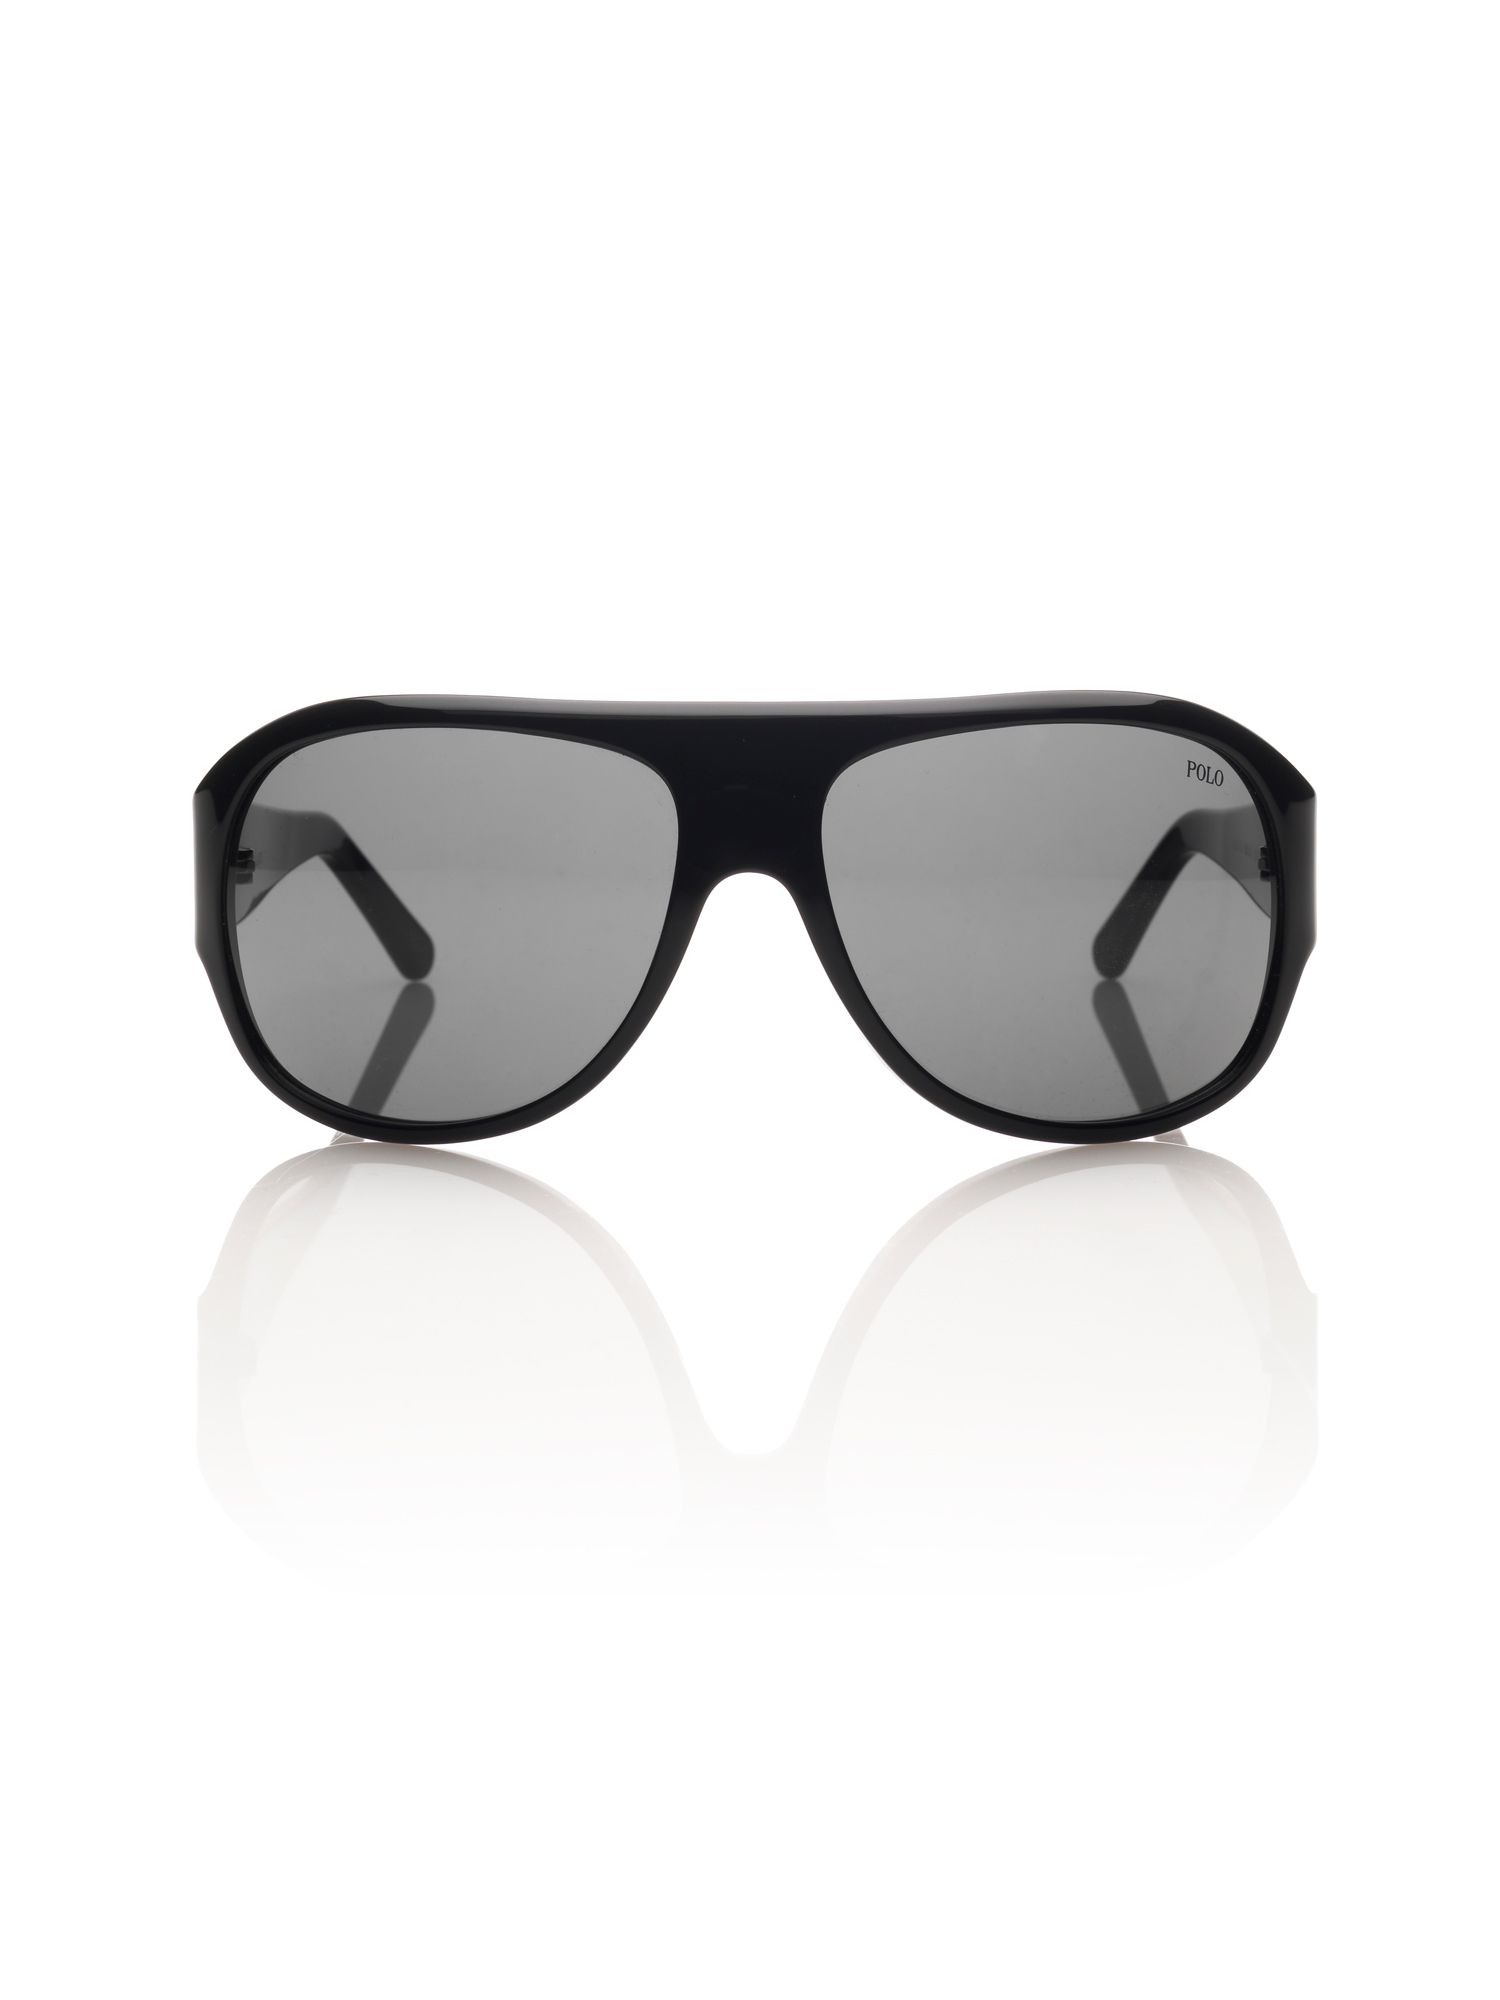 Men's Polo Ralph Lauren Mens round sunglasses